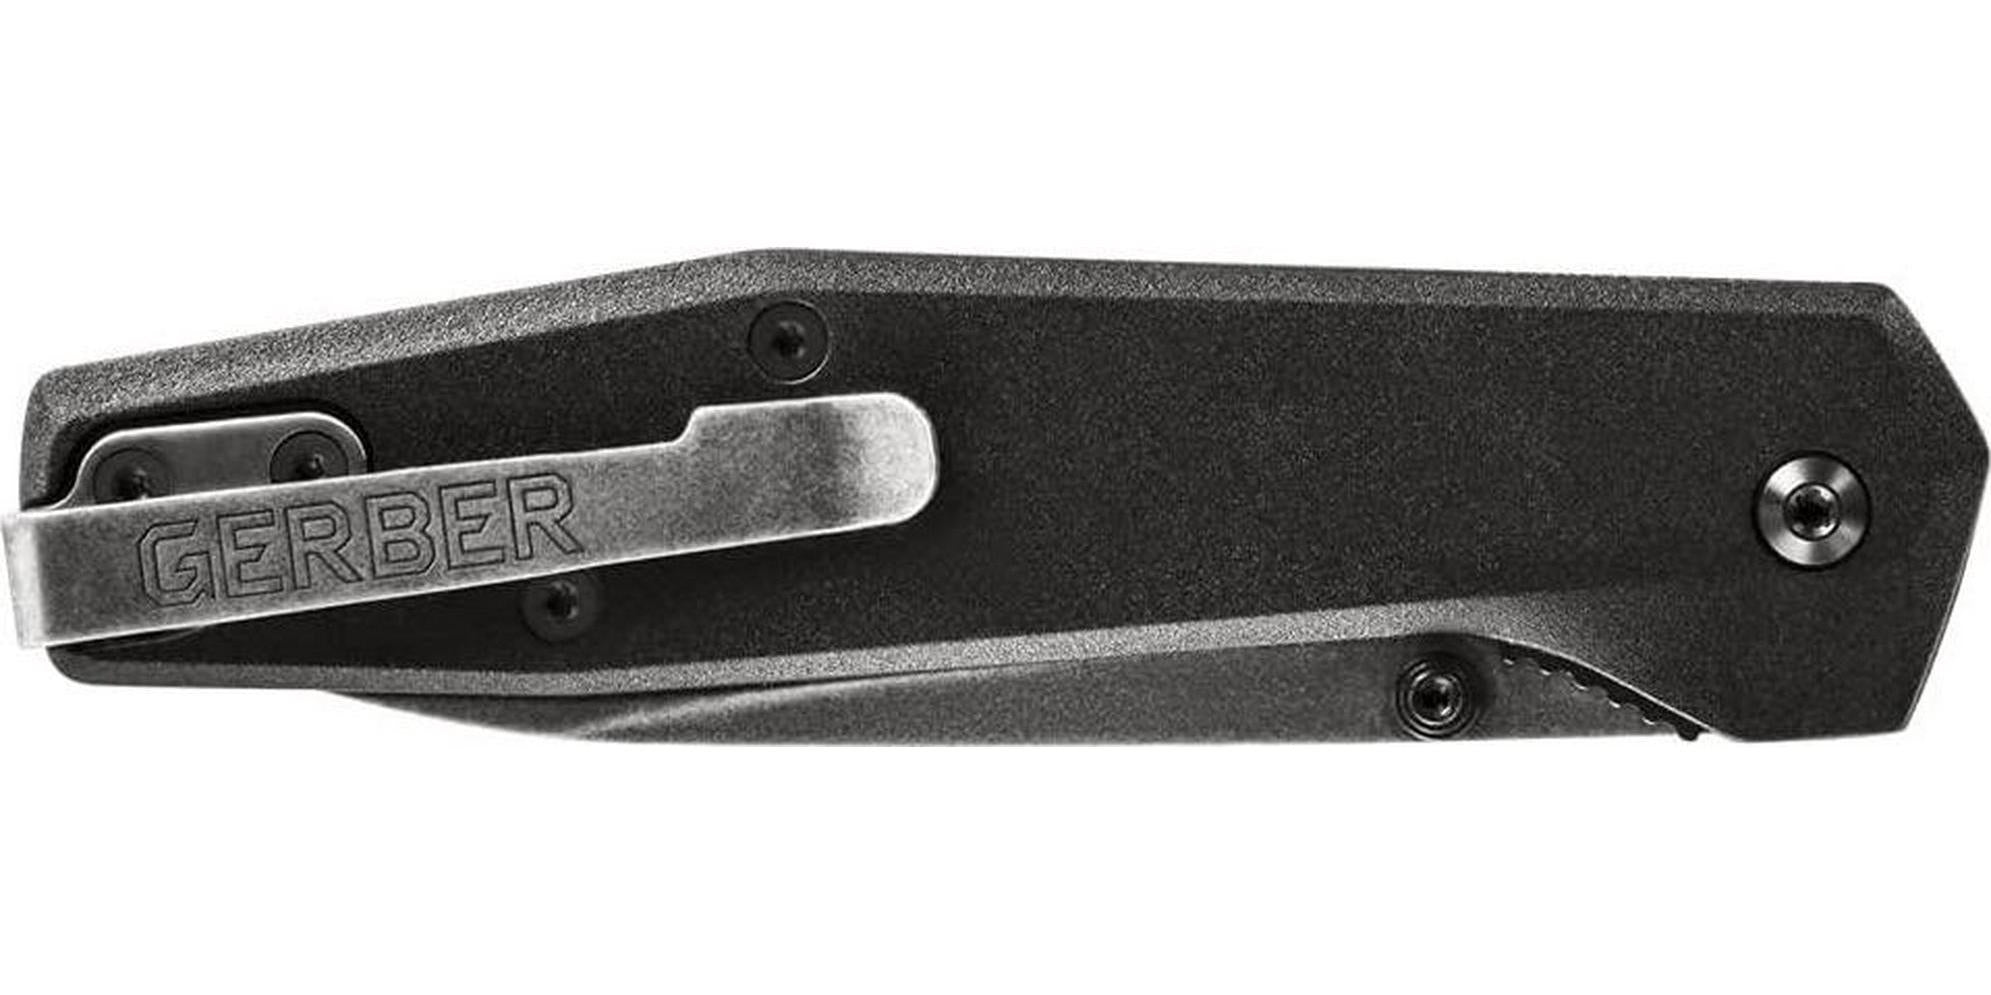 Gerber Gear, Gerber Gear Fuse Pocket Knife, 3.3 Inch Plane Edge Blade